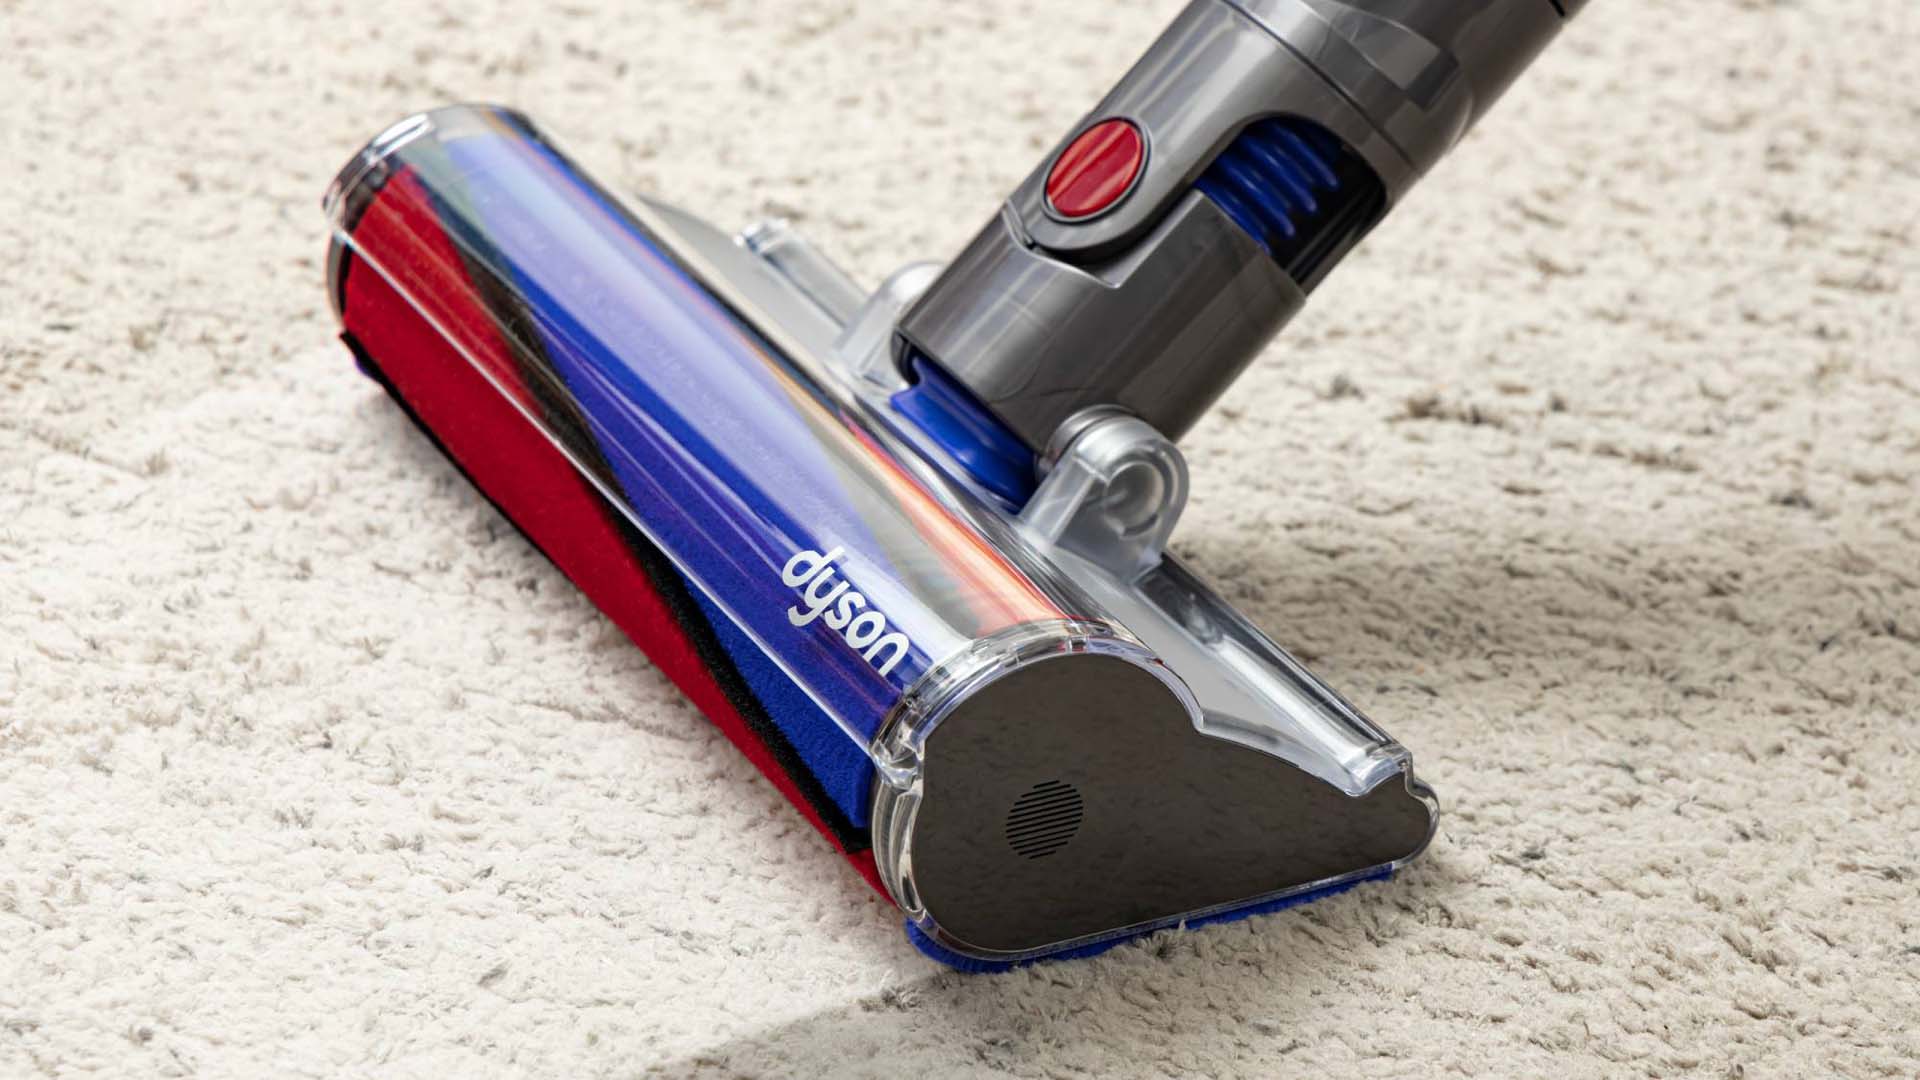 Dyson vacuum cleaner on carpet